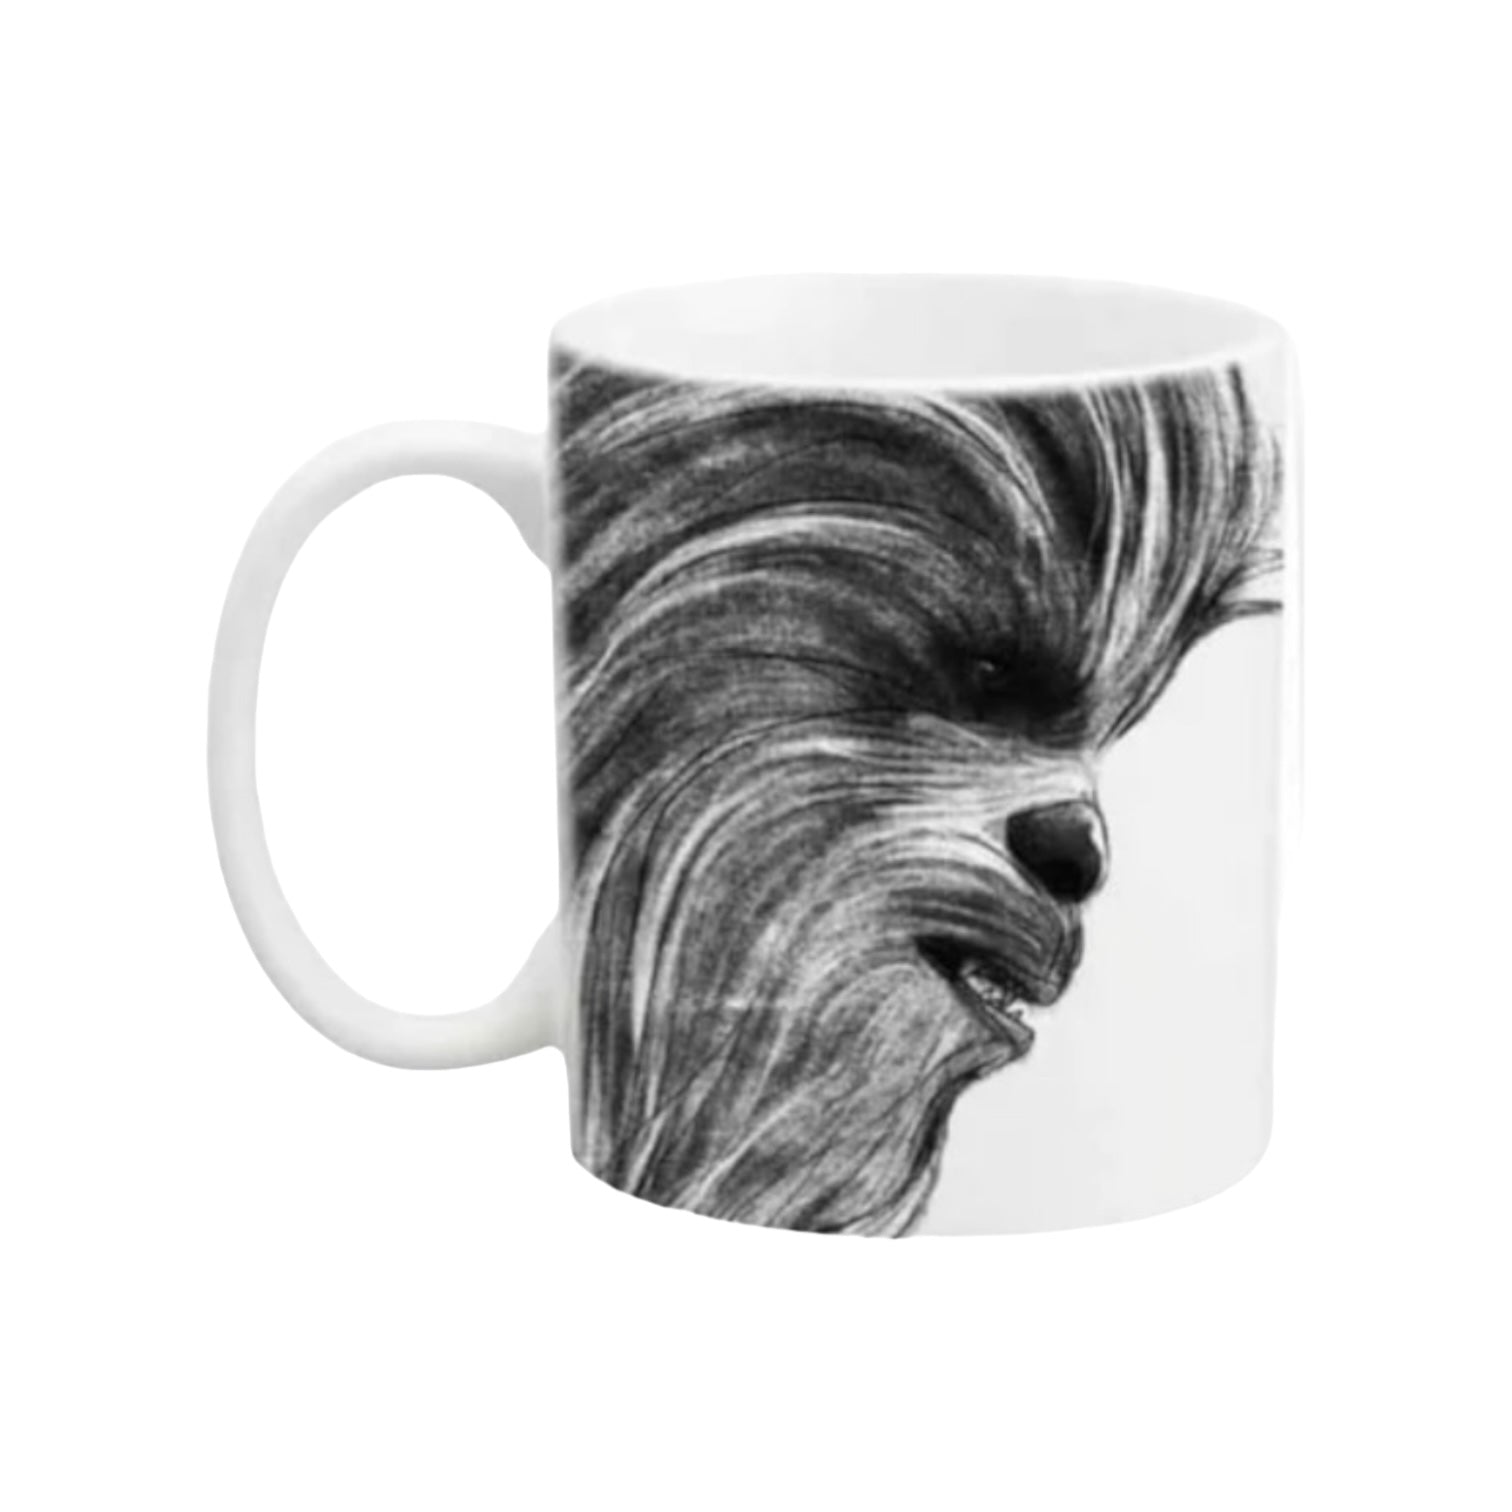 Chewbacca and Porg Funko Ceramic Mug - Star Wars